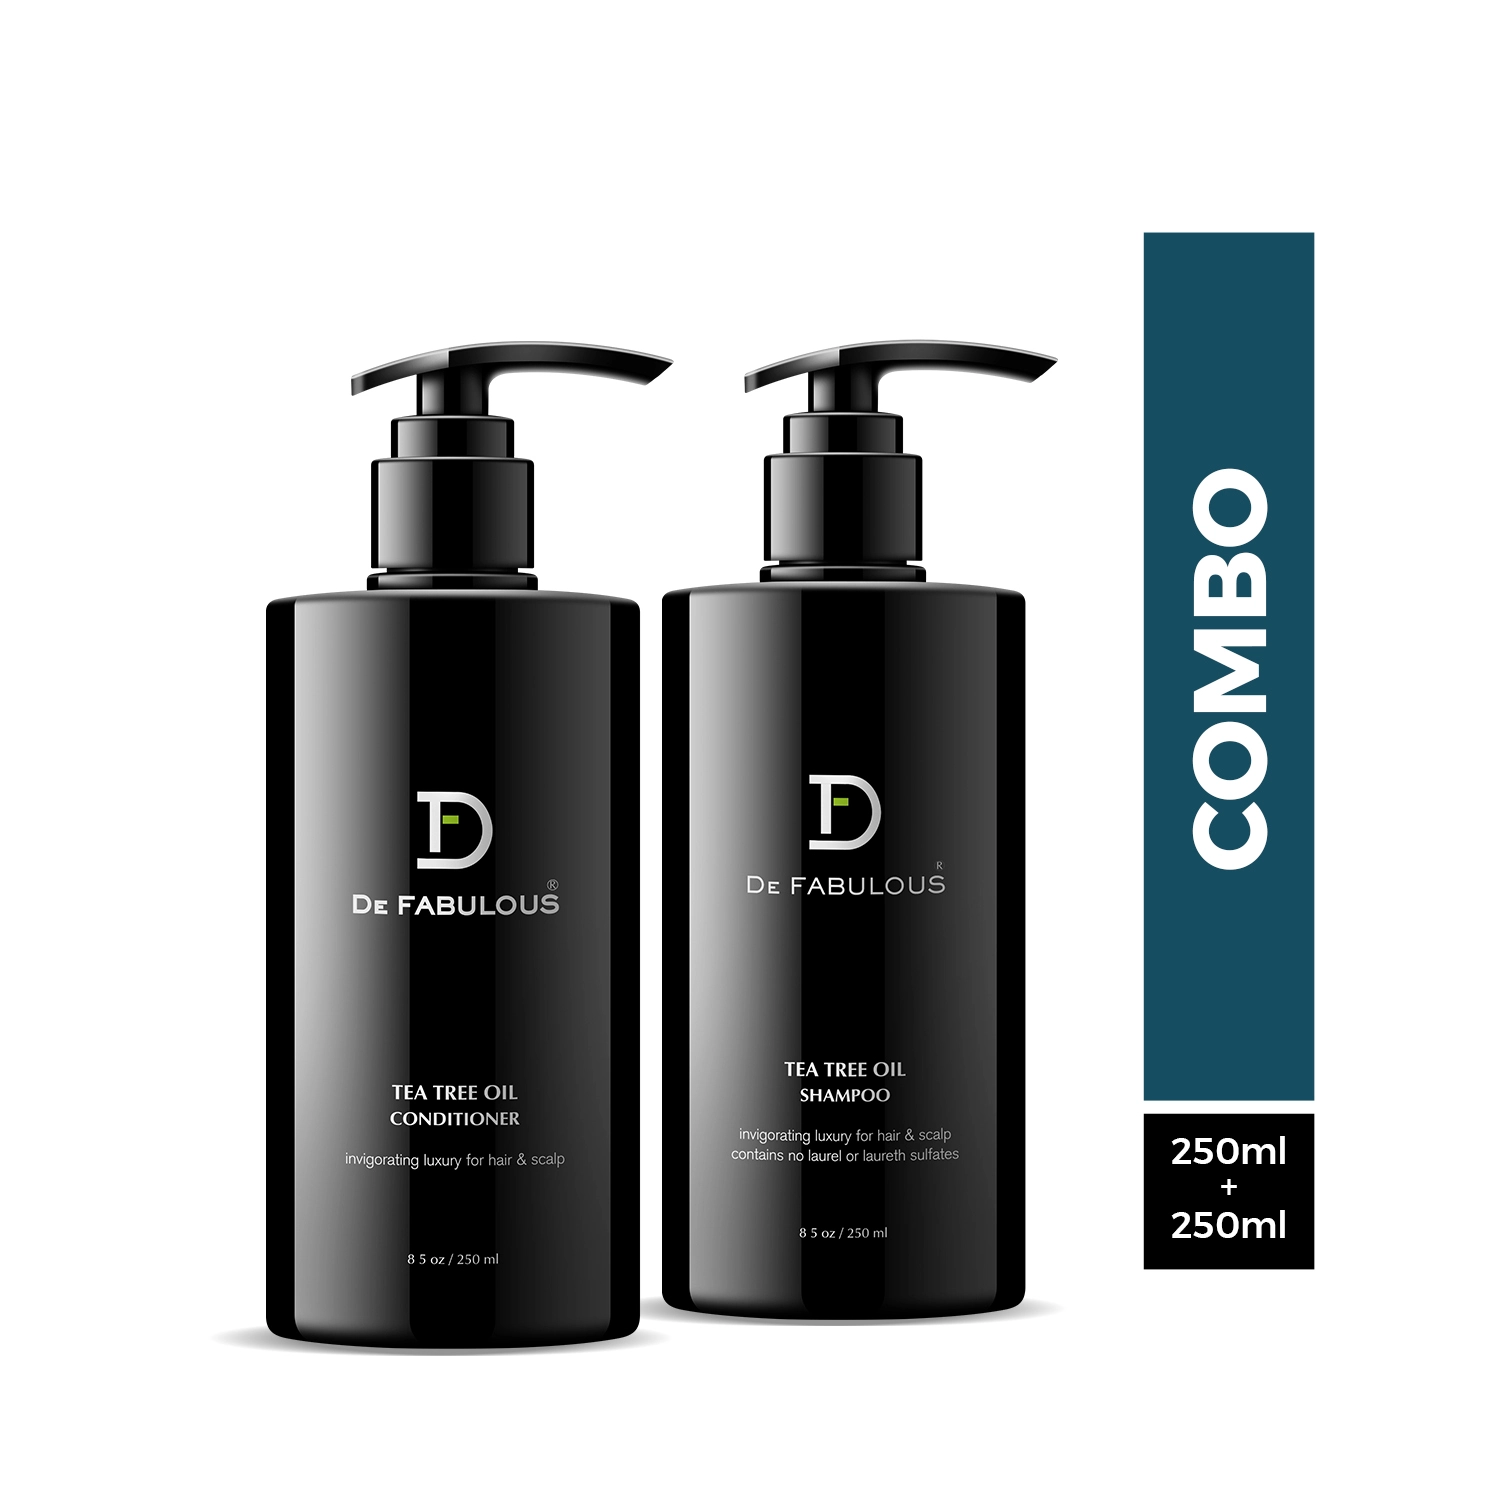 "De Fabulous Tea Tree Oil Shampoo & Conditioner: Invigorate Your Hair with the Power of Tea Tree Oil"